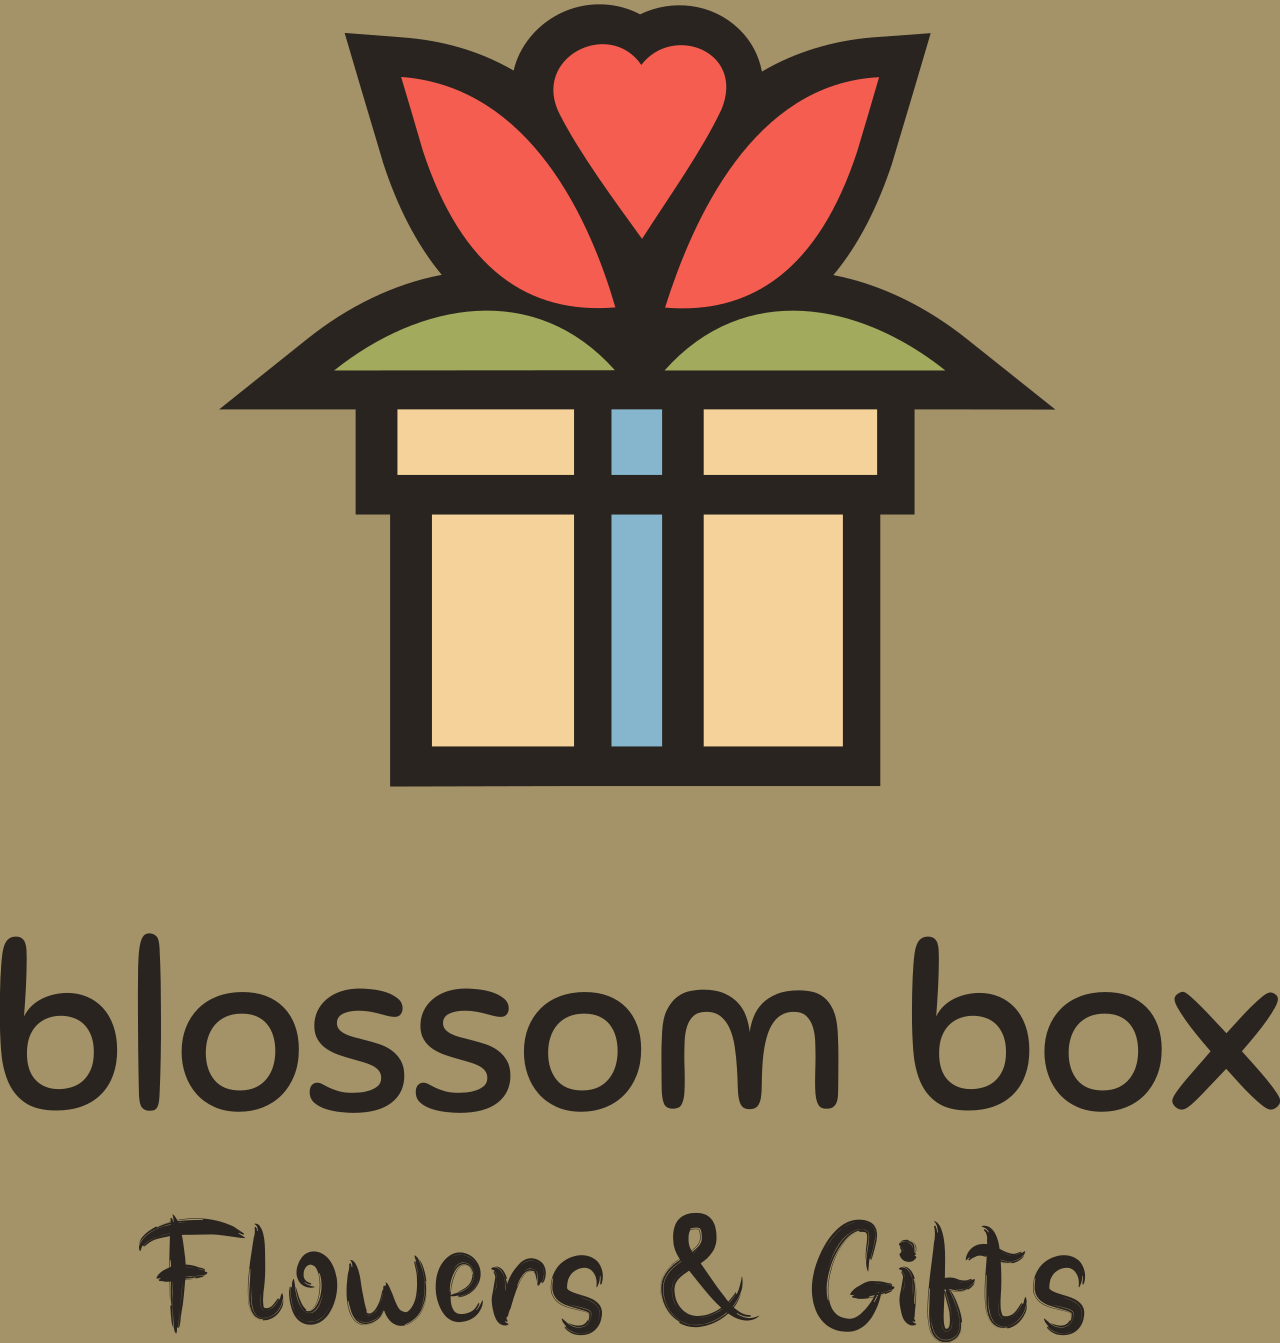 blossom box's web page